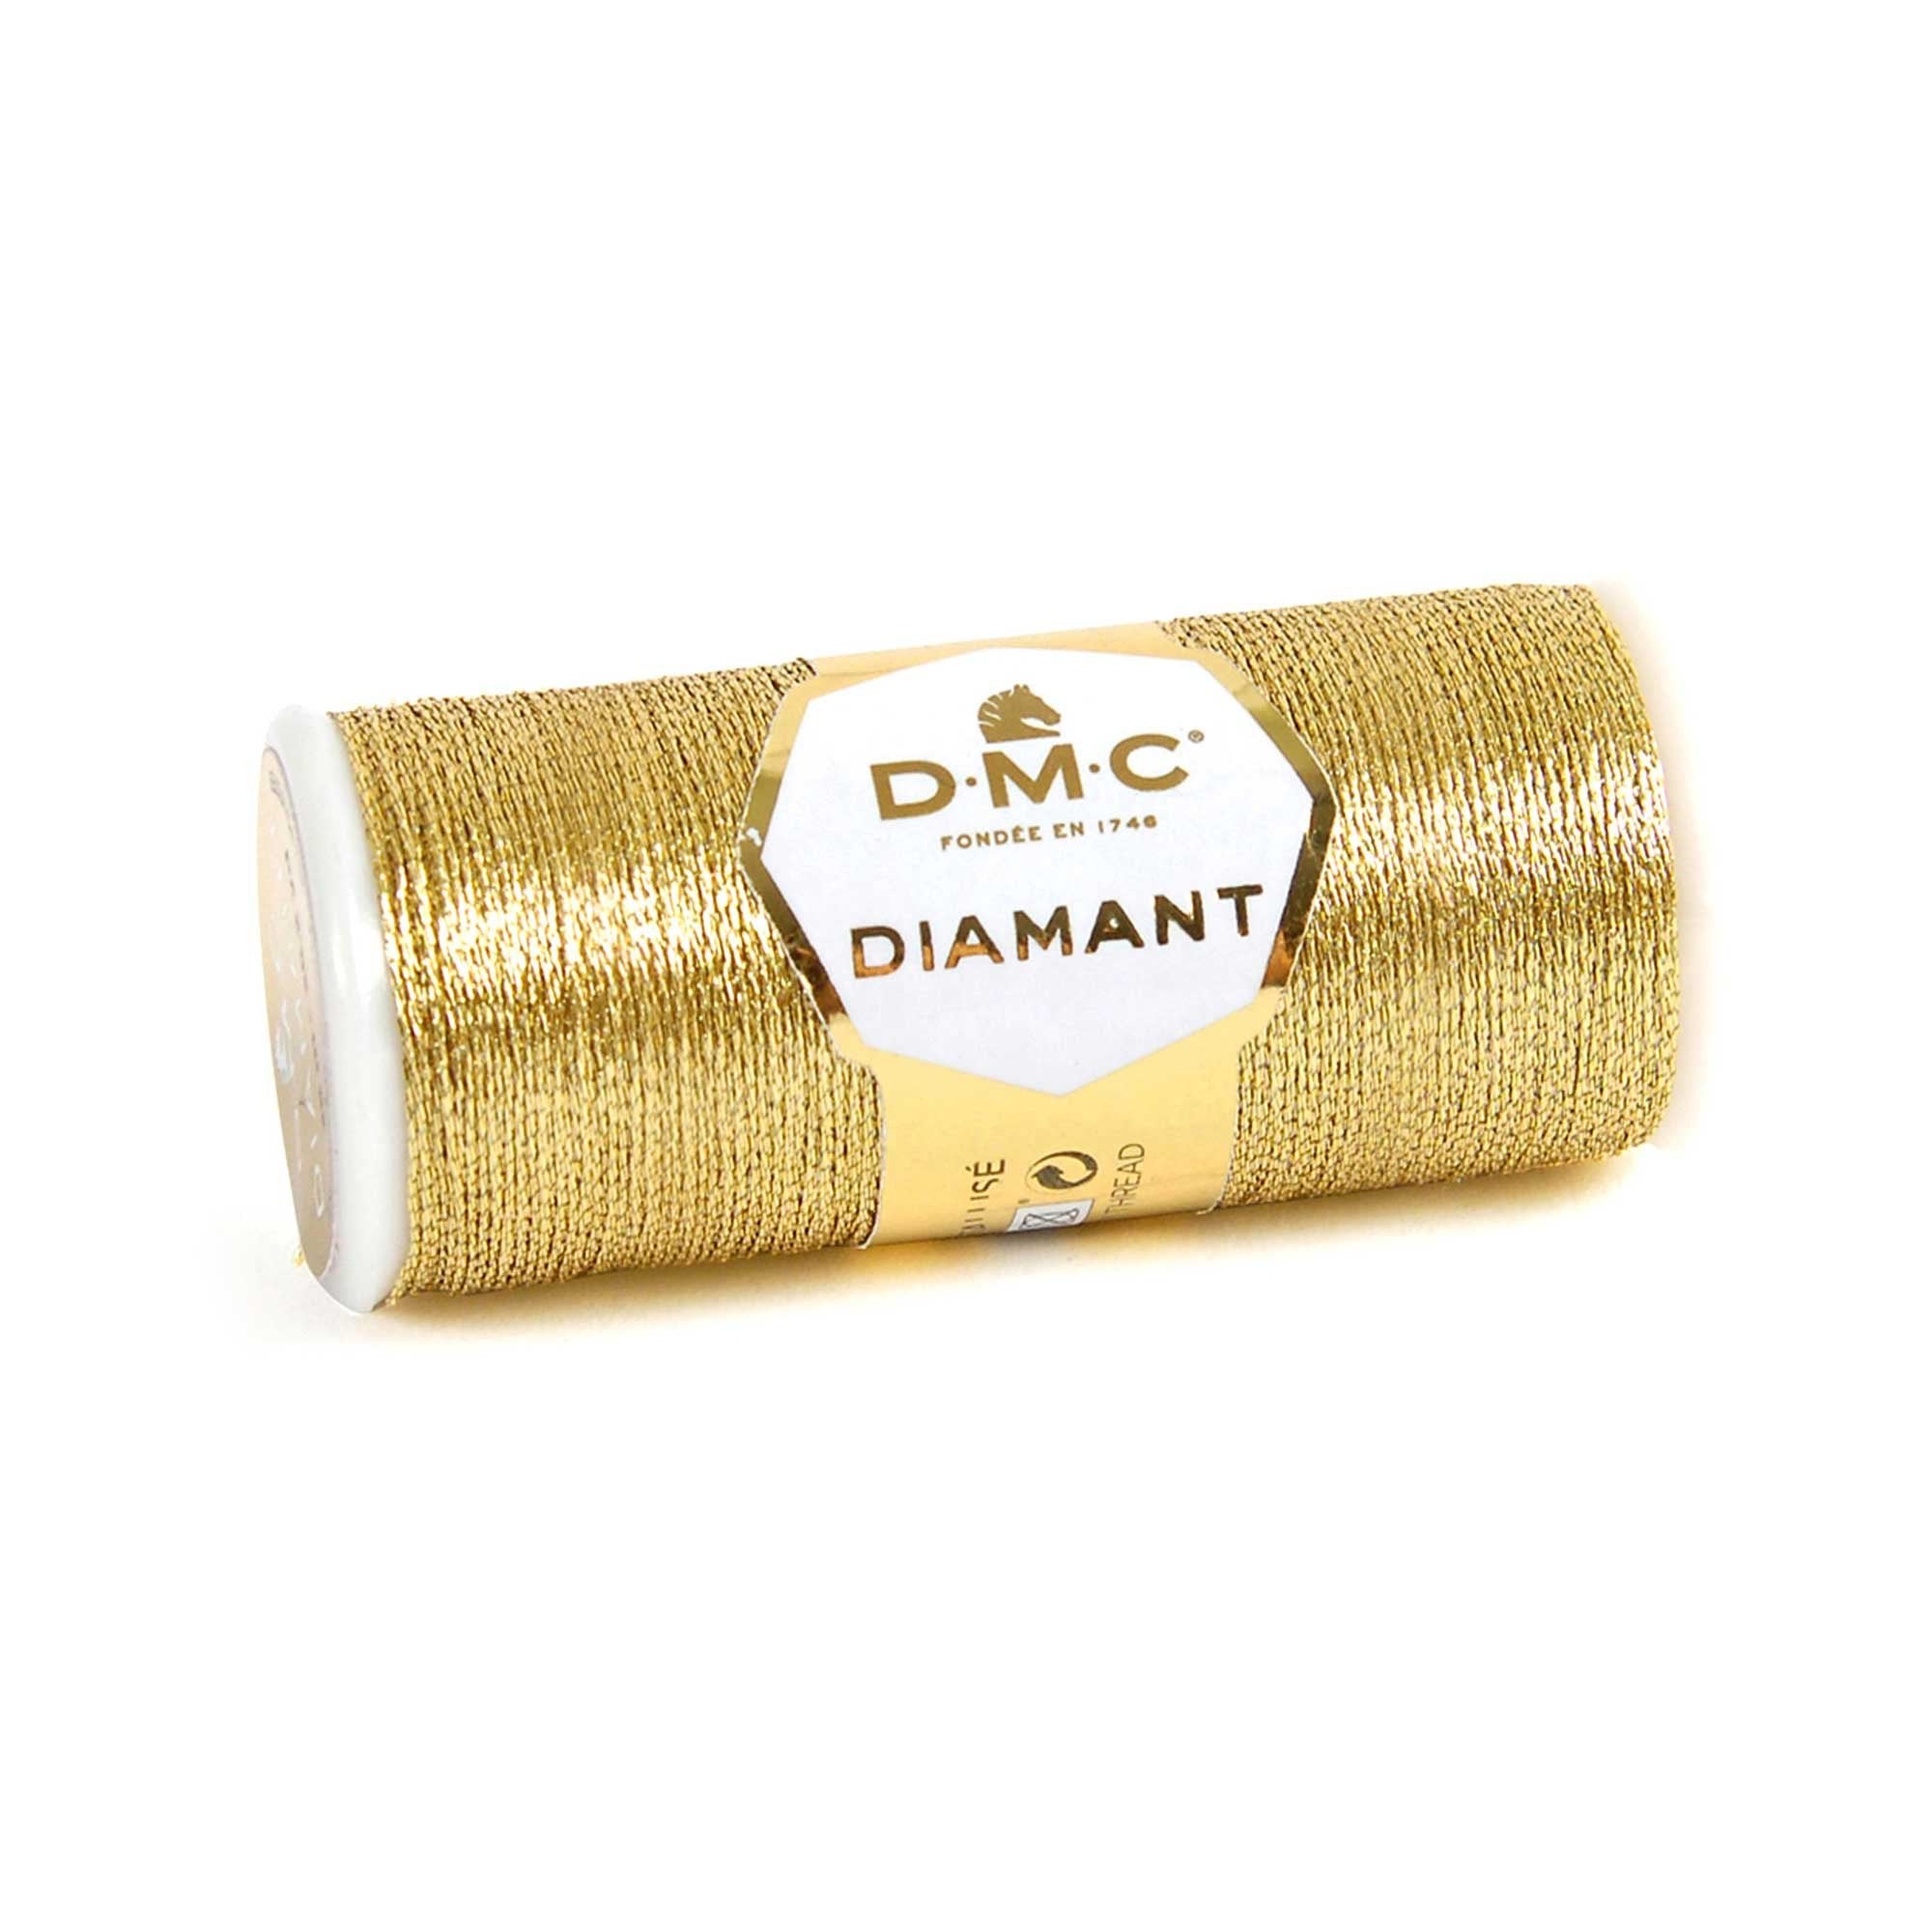 DMC Diamant Embroidery Thread 35m Spool - D3821 Light Gold - Crafty Divas